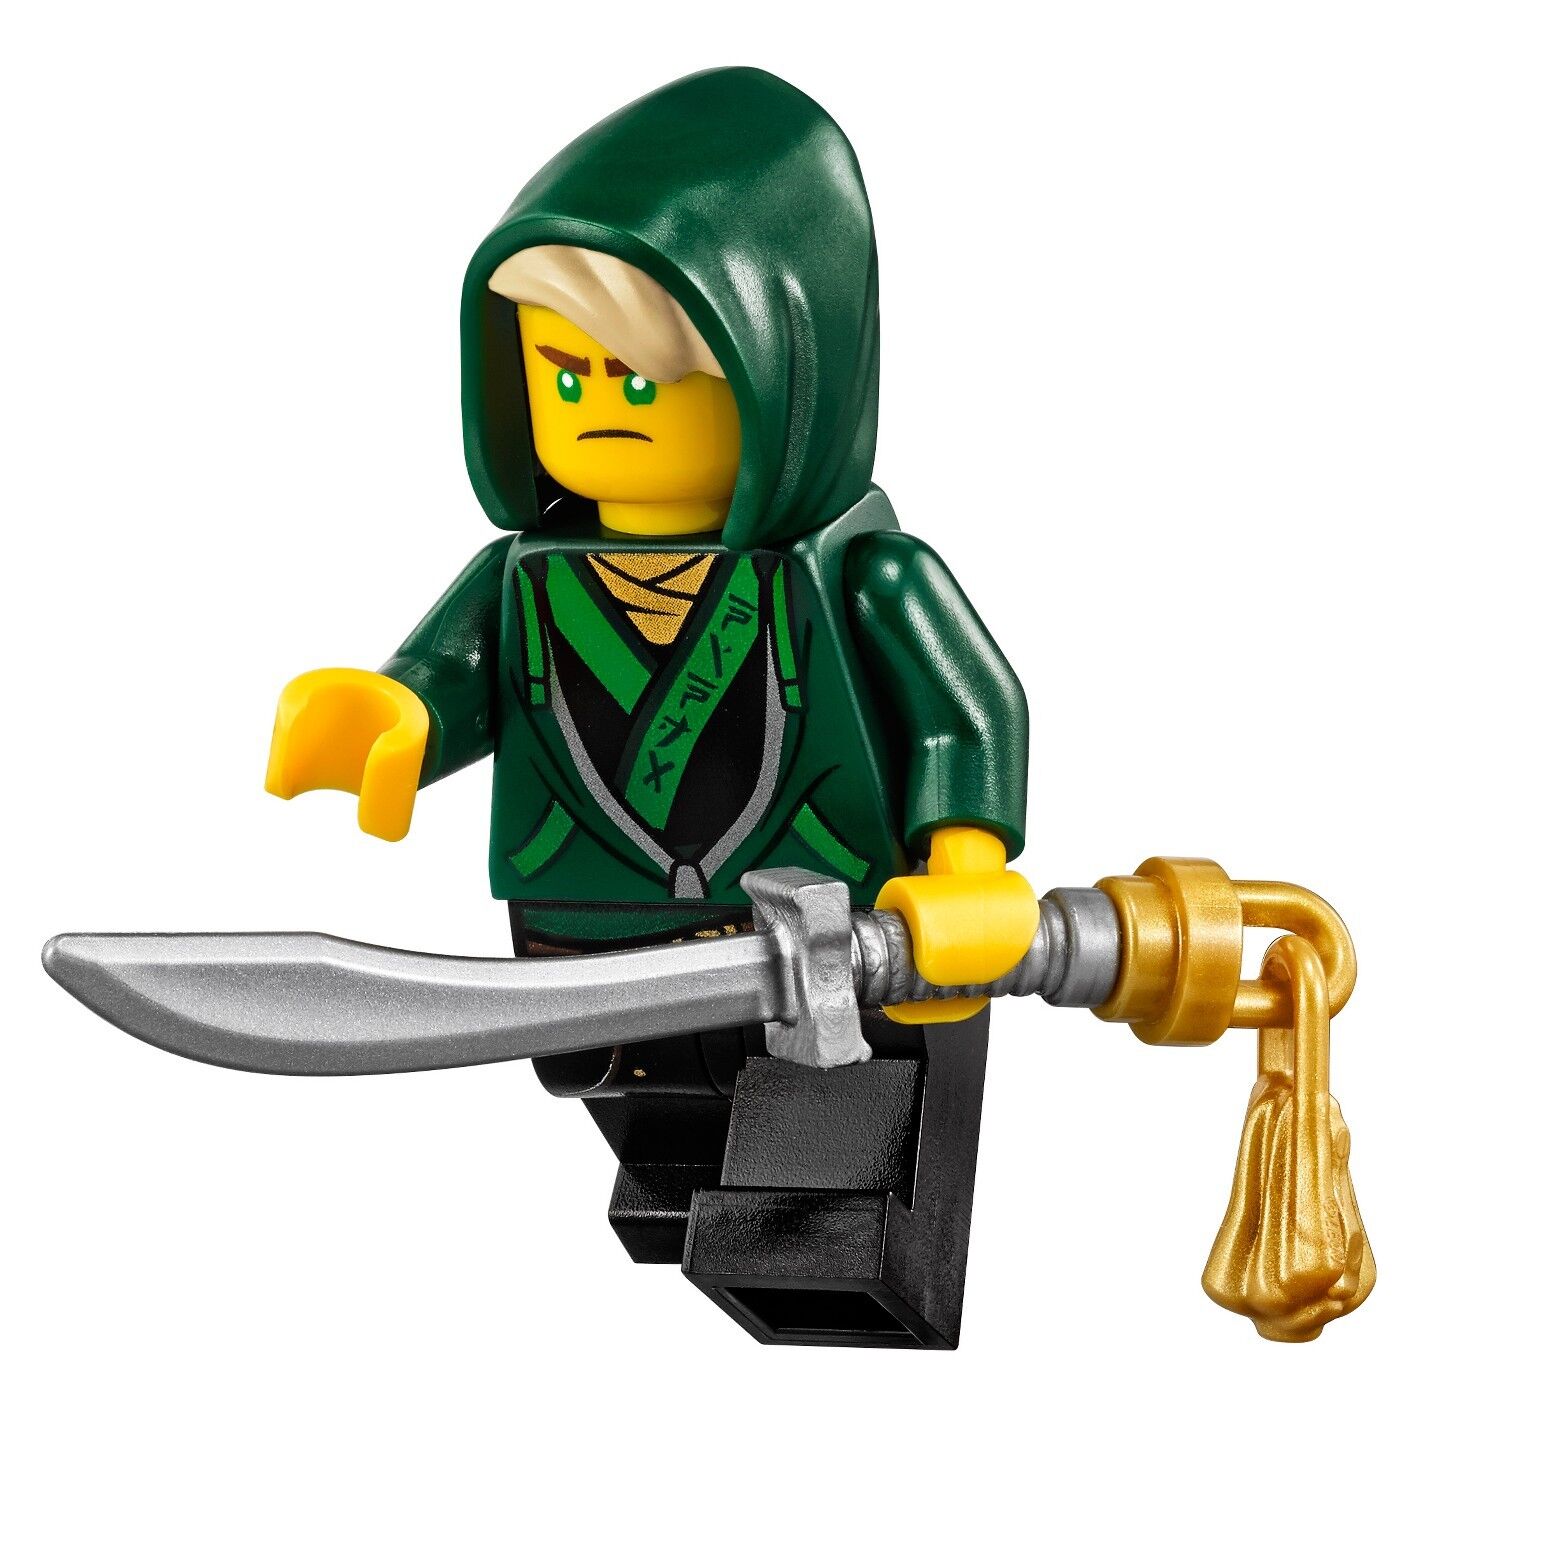 Lego The Ninjago Movie Lloyd Garmadon Minifigure W/ Weapon New | Ebay